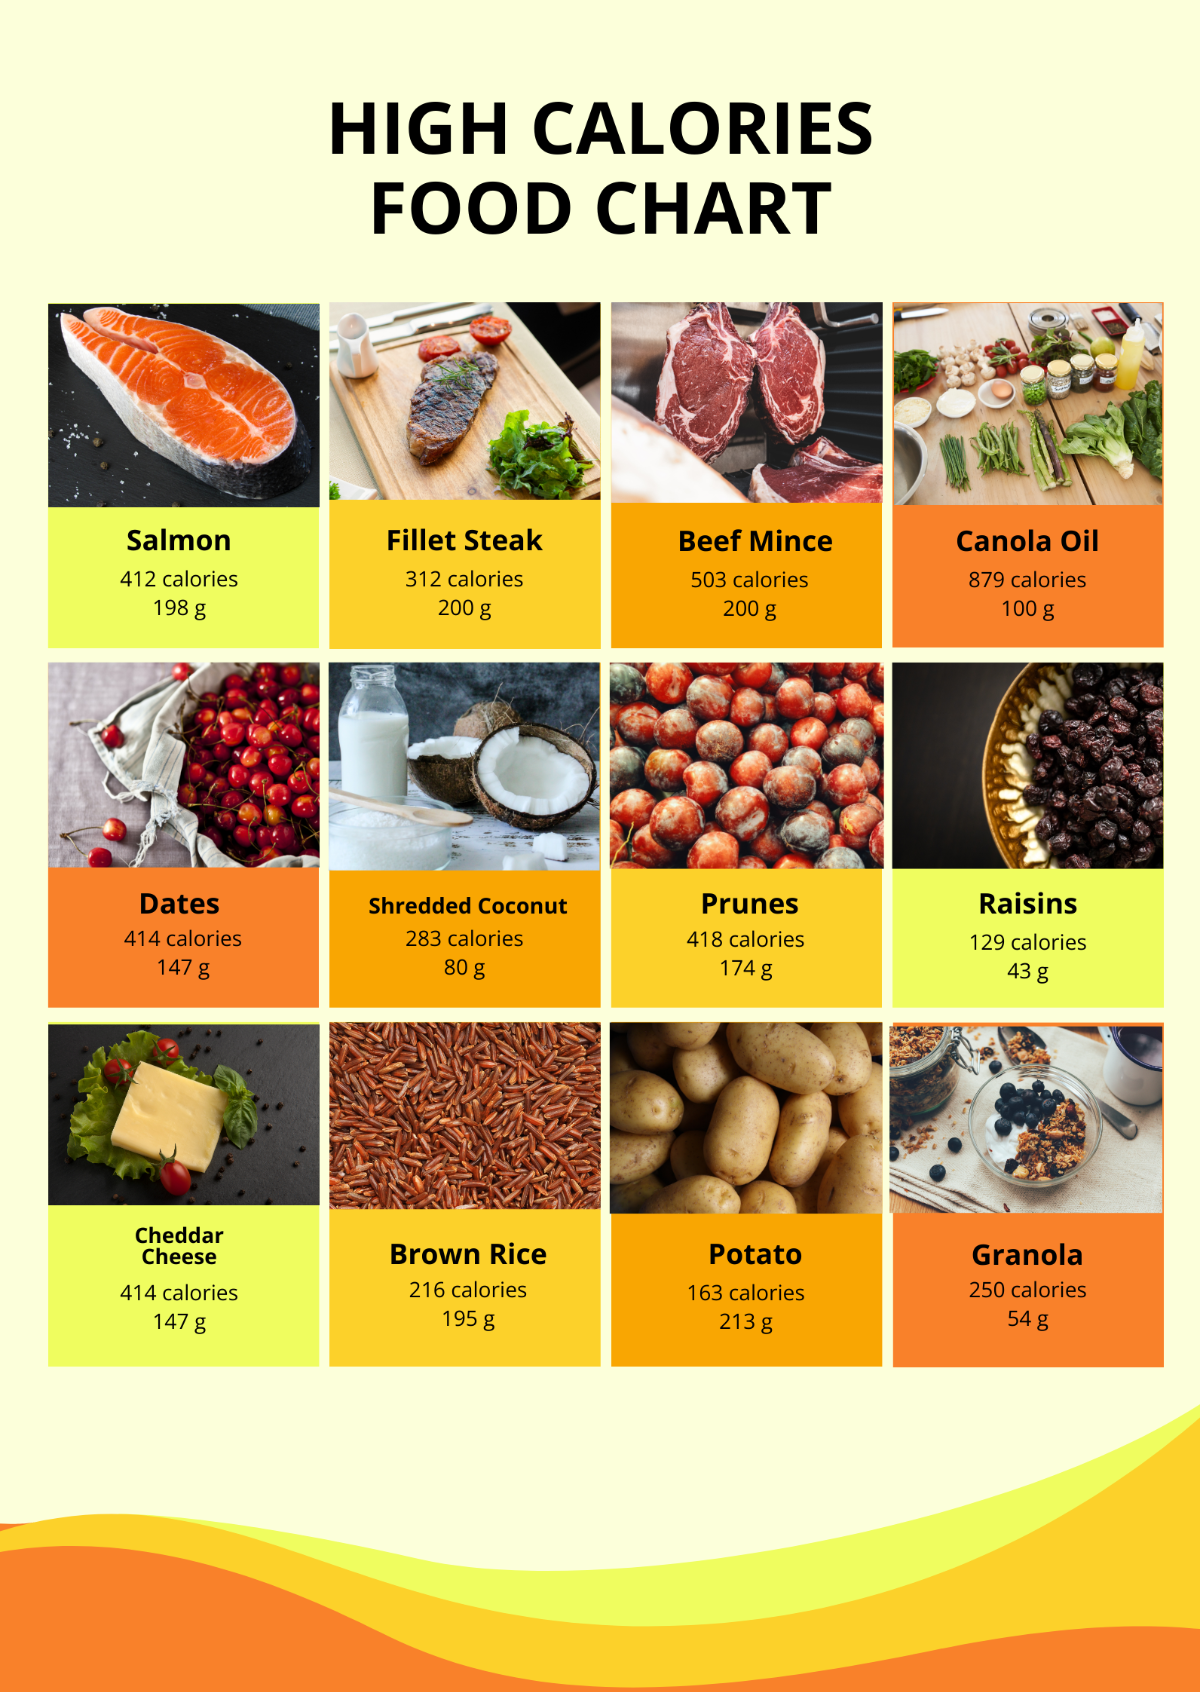 High Calories Food Chart Template